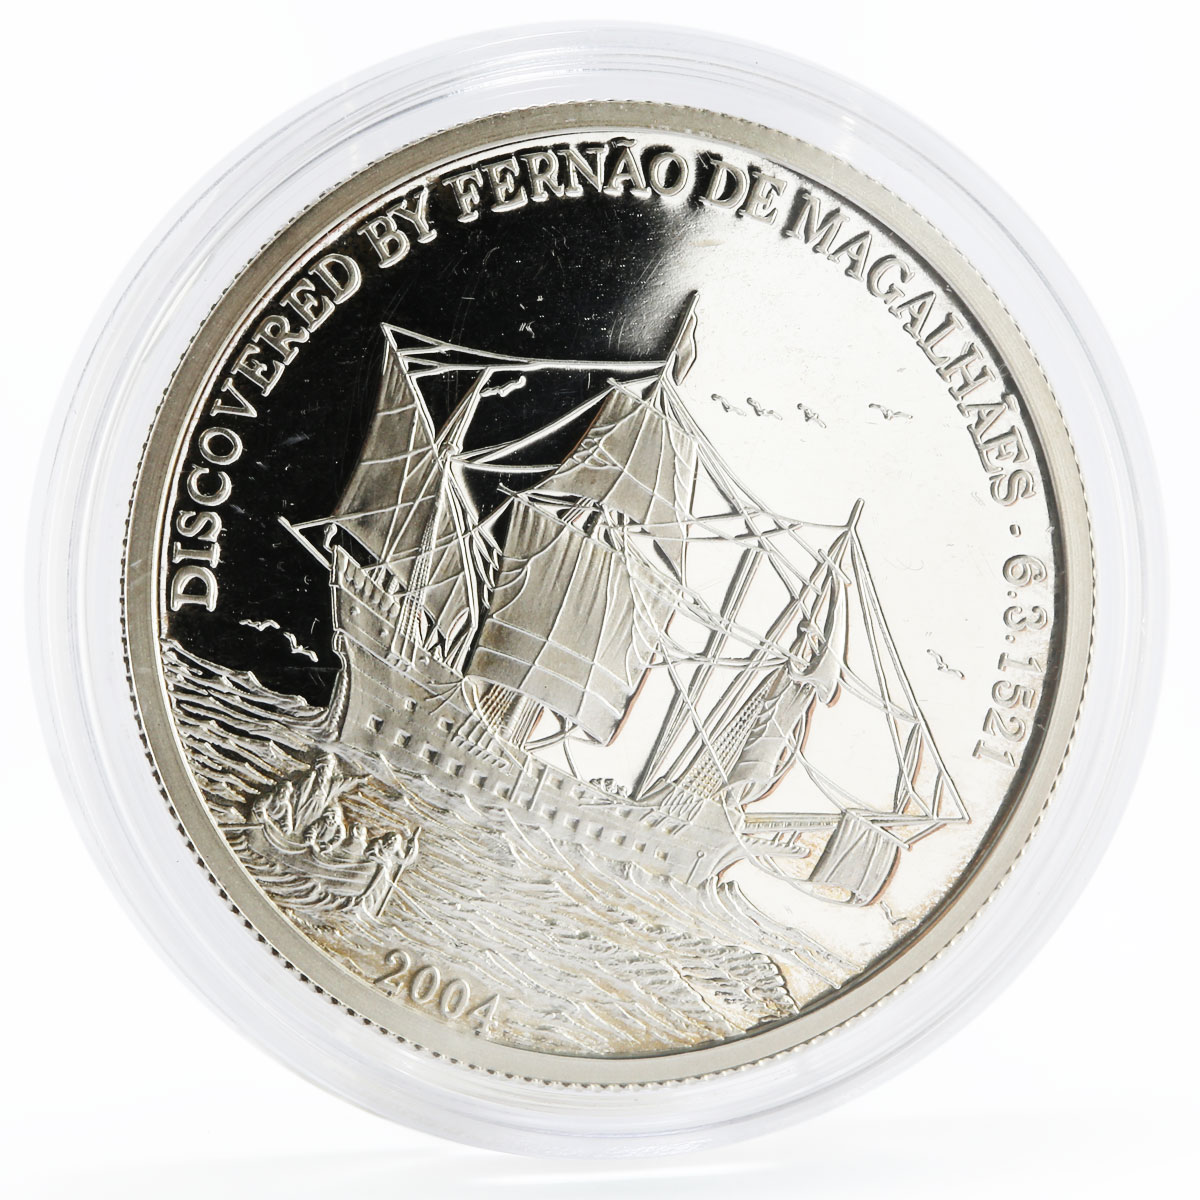 Northern Mariana Islands 5 dollars Fernando Magellan Ship proof silver coin 2004